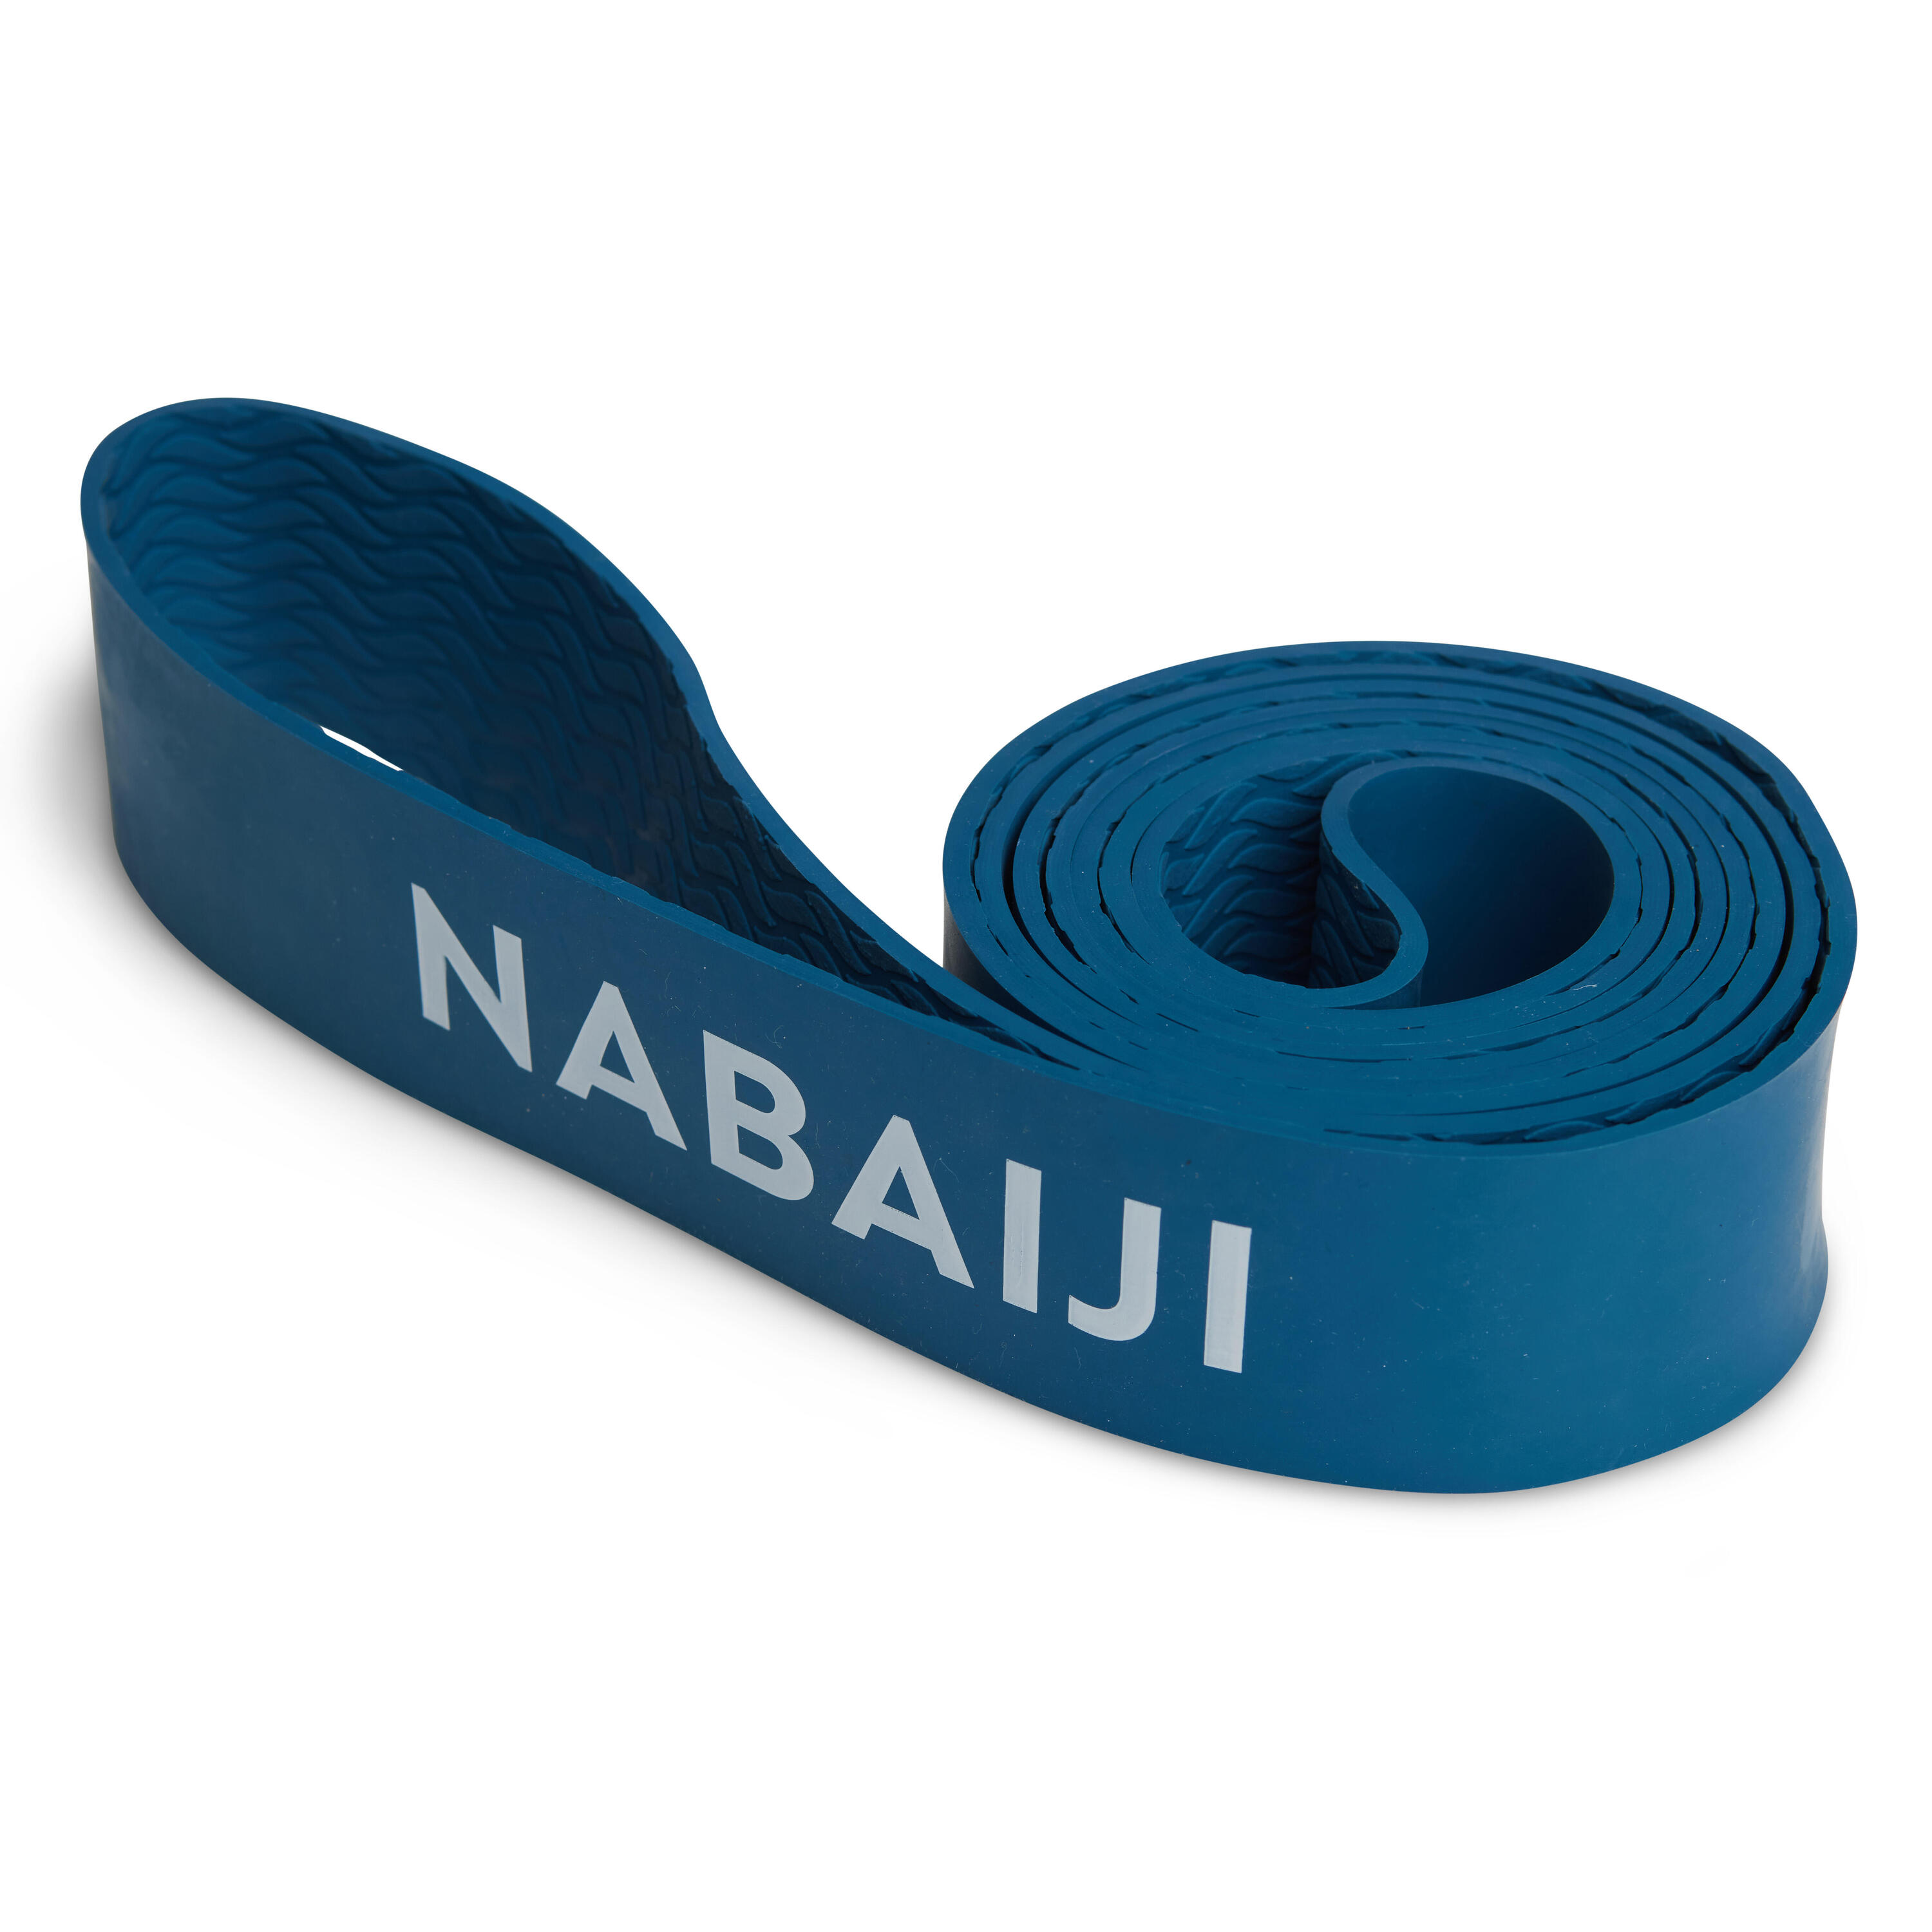 NABAIJI Aquagym aquatic elastic training band 25 kg Dark Blue